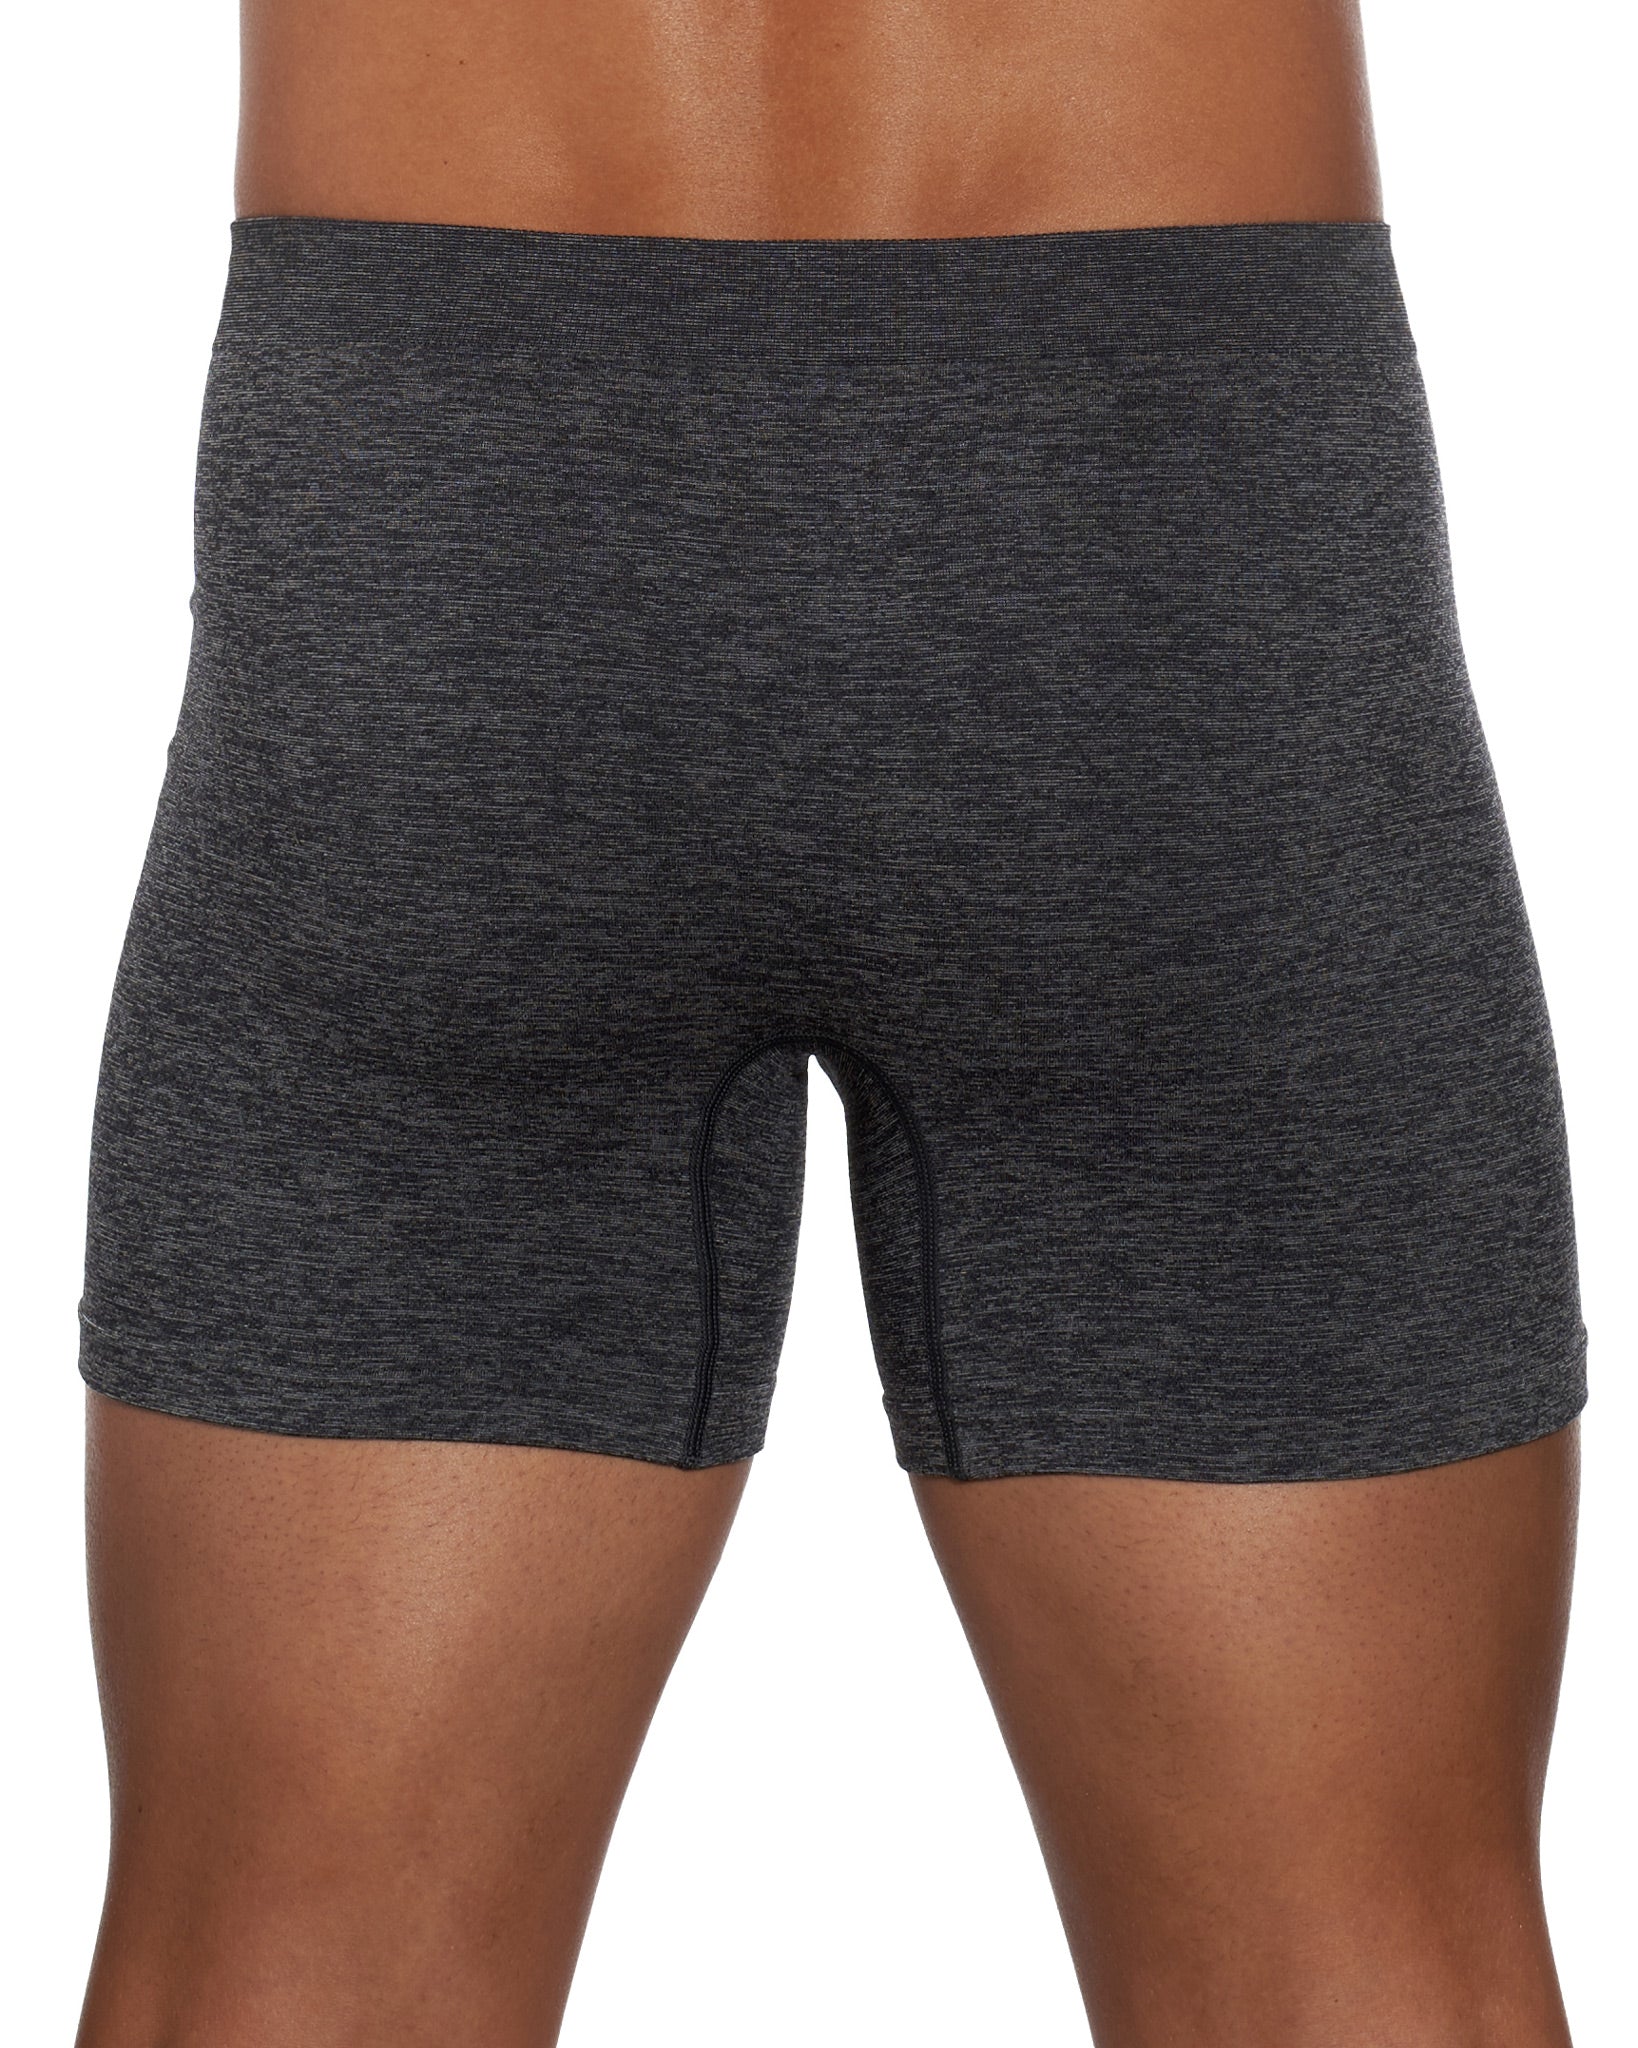 SLM Men's Seamless Brief Boxer Shorts